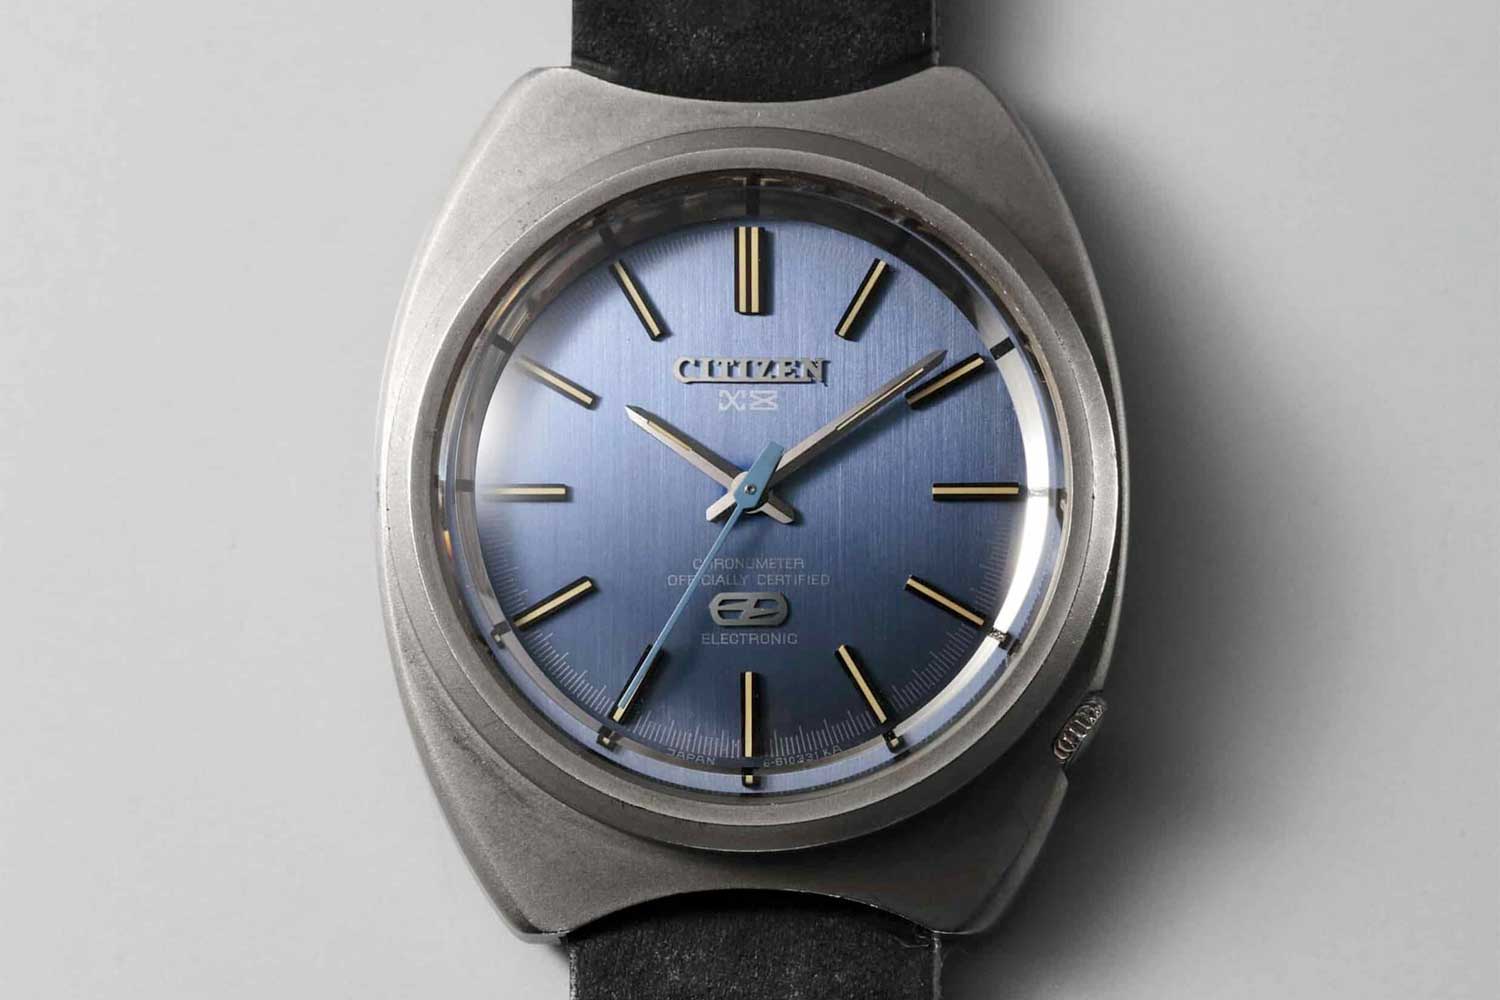 Citizen X-8 Chronometer, 1970 (Image: wornandwound.com)